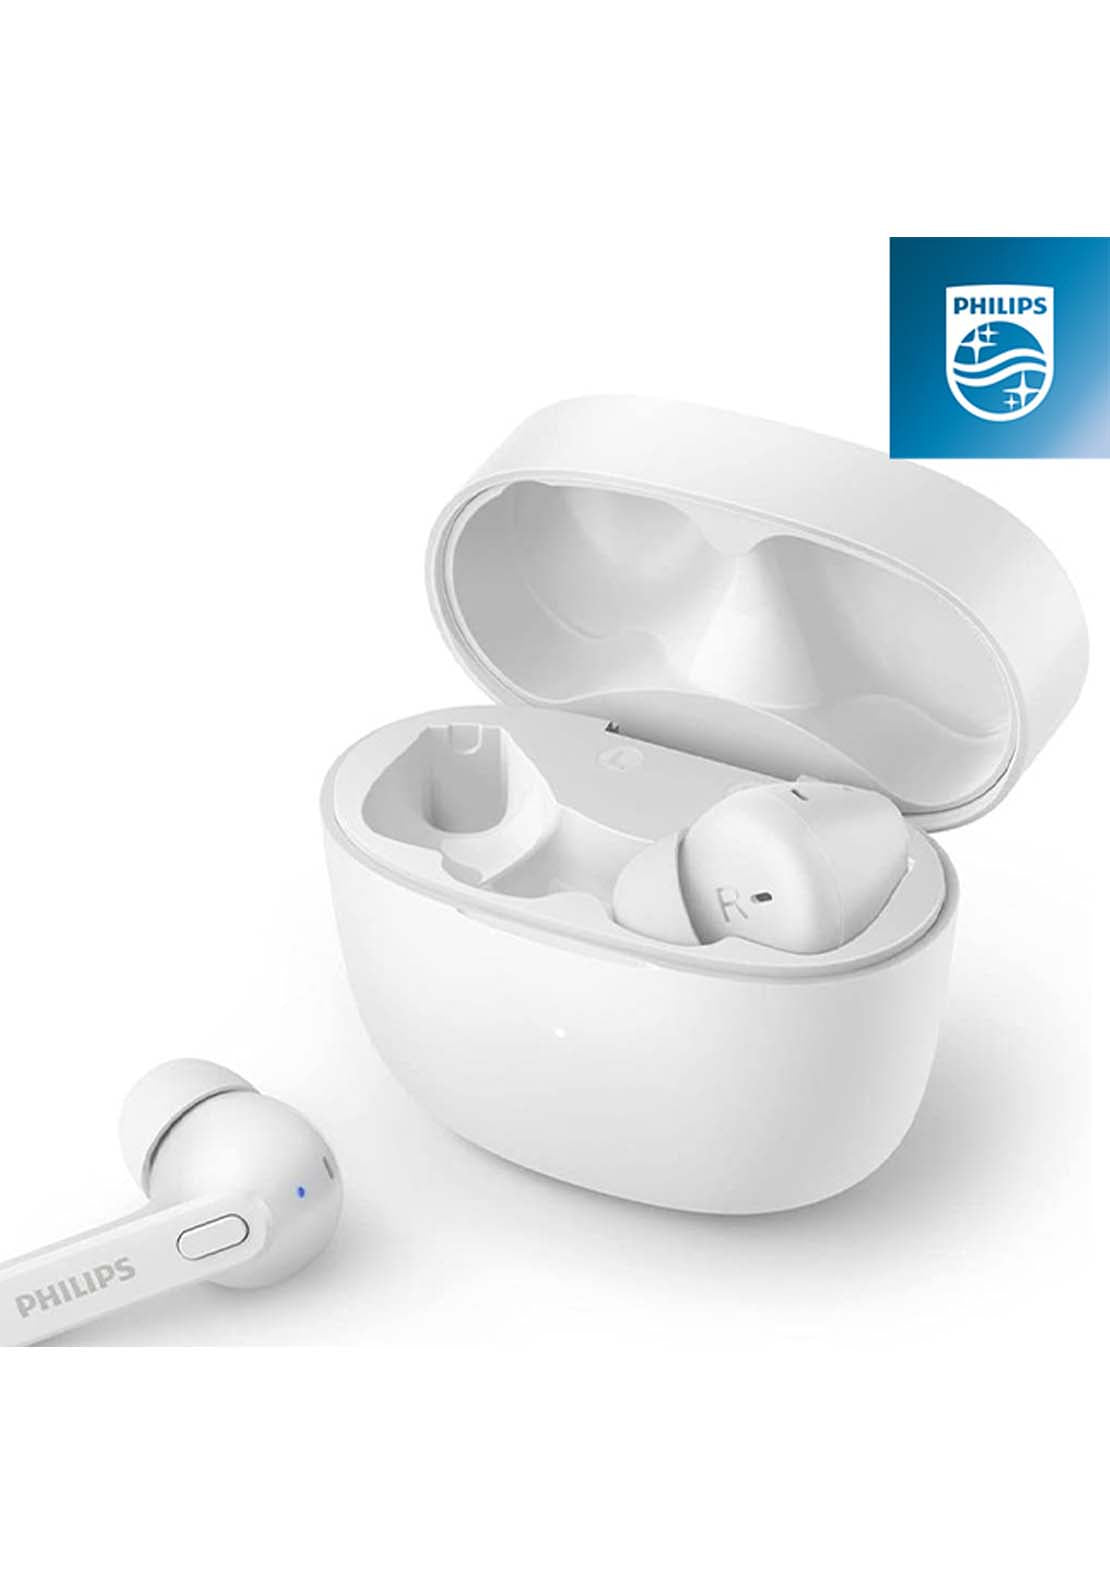 Philips Wireless Bluetooth Headphones | Tat2206Wt00 1 Shaws Department Stores